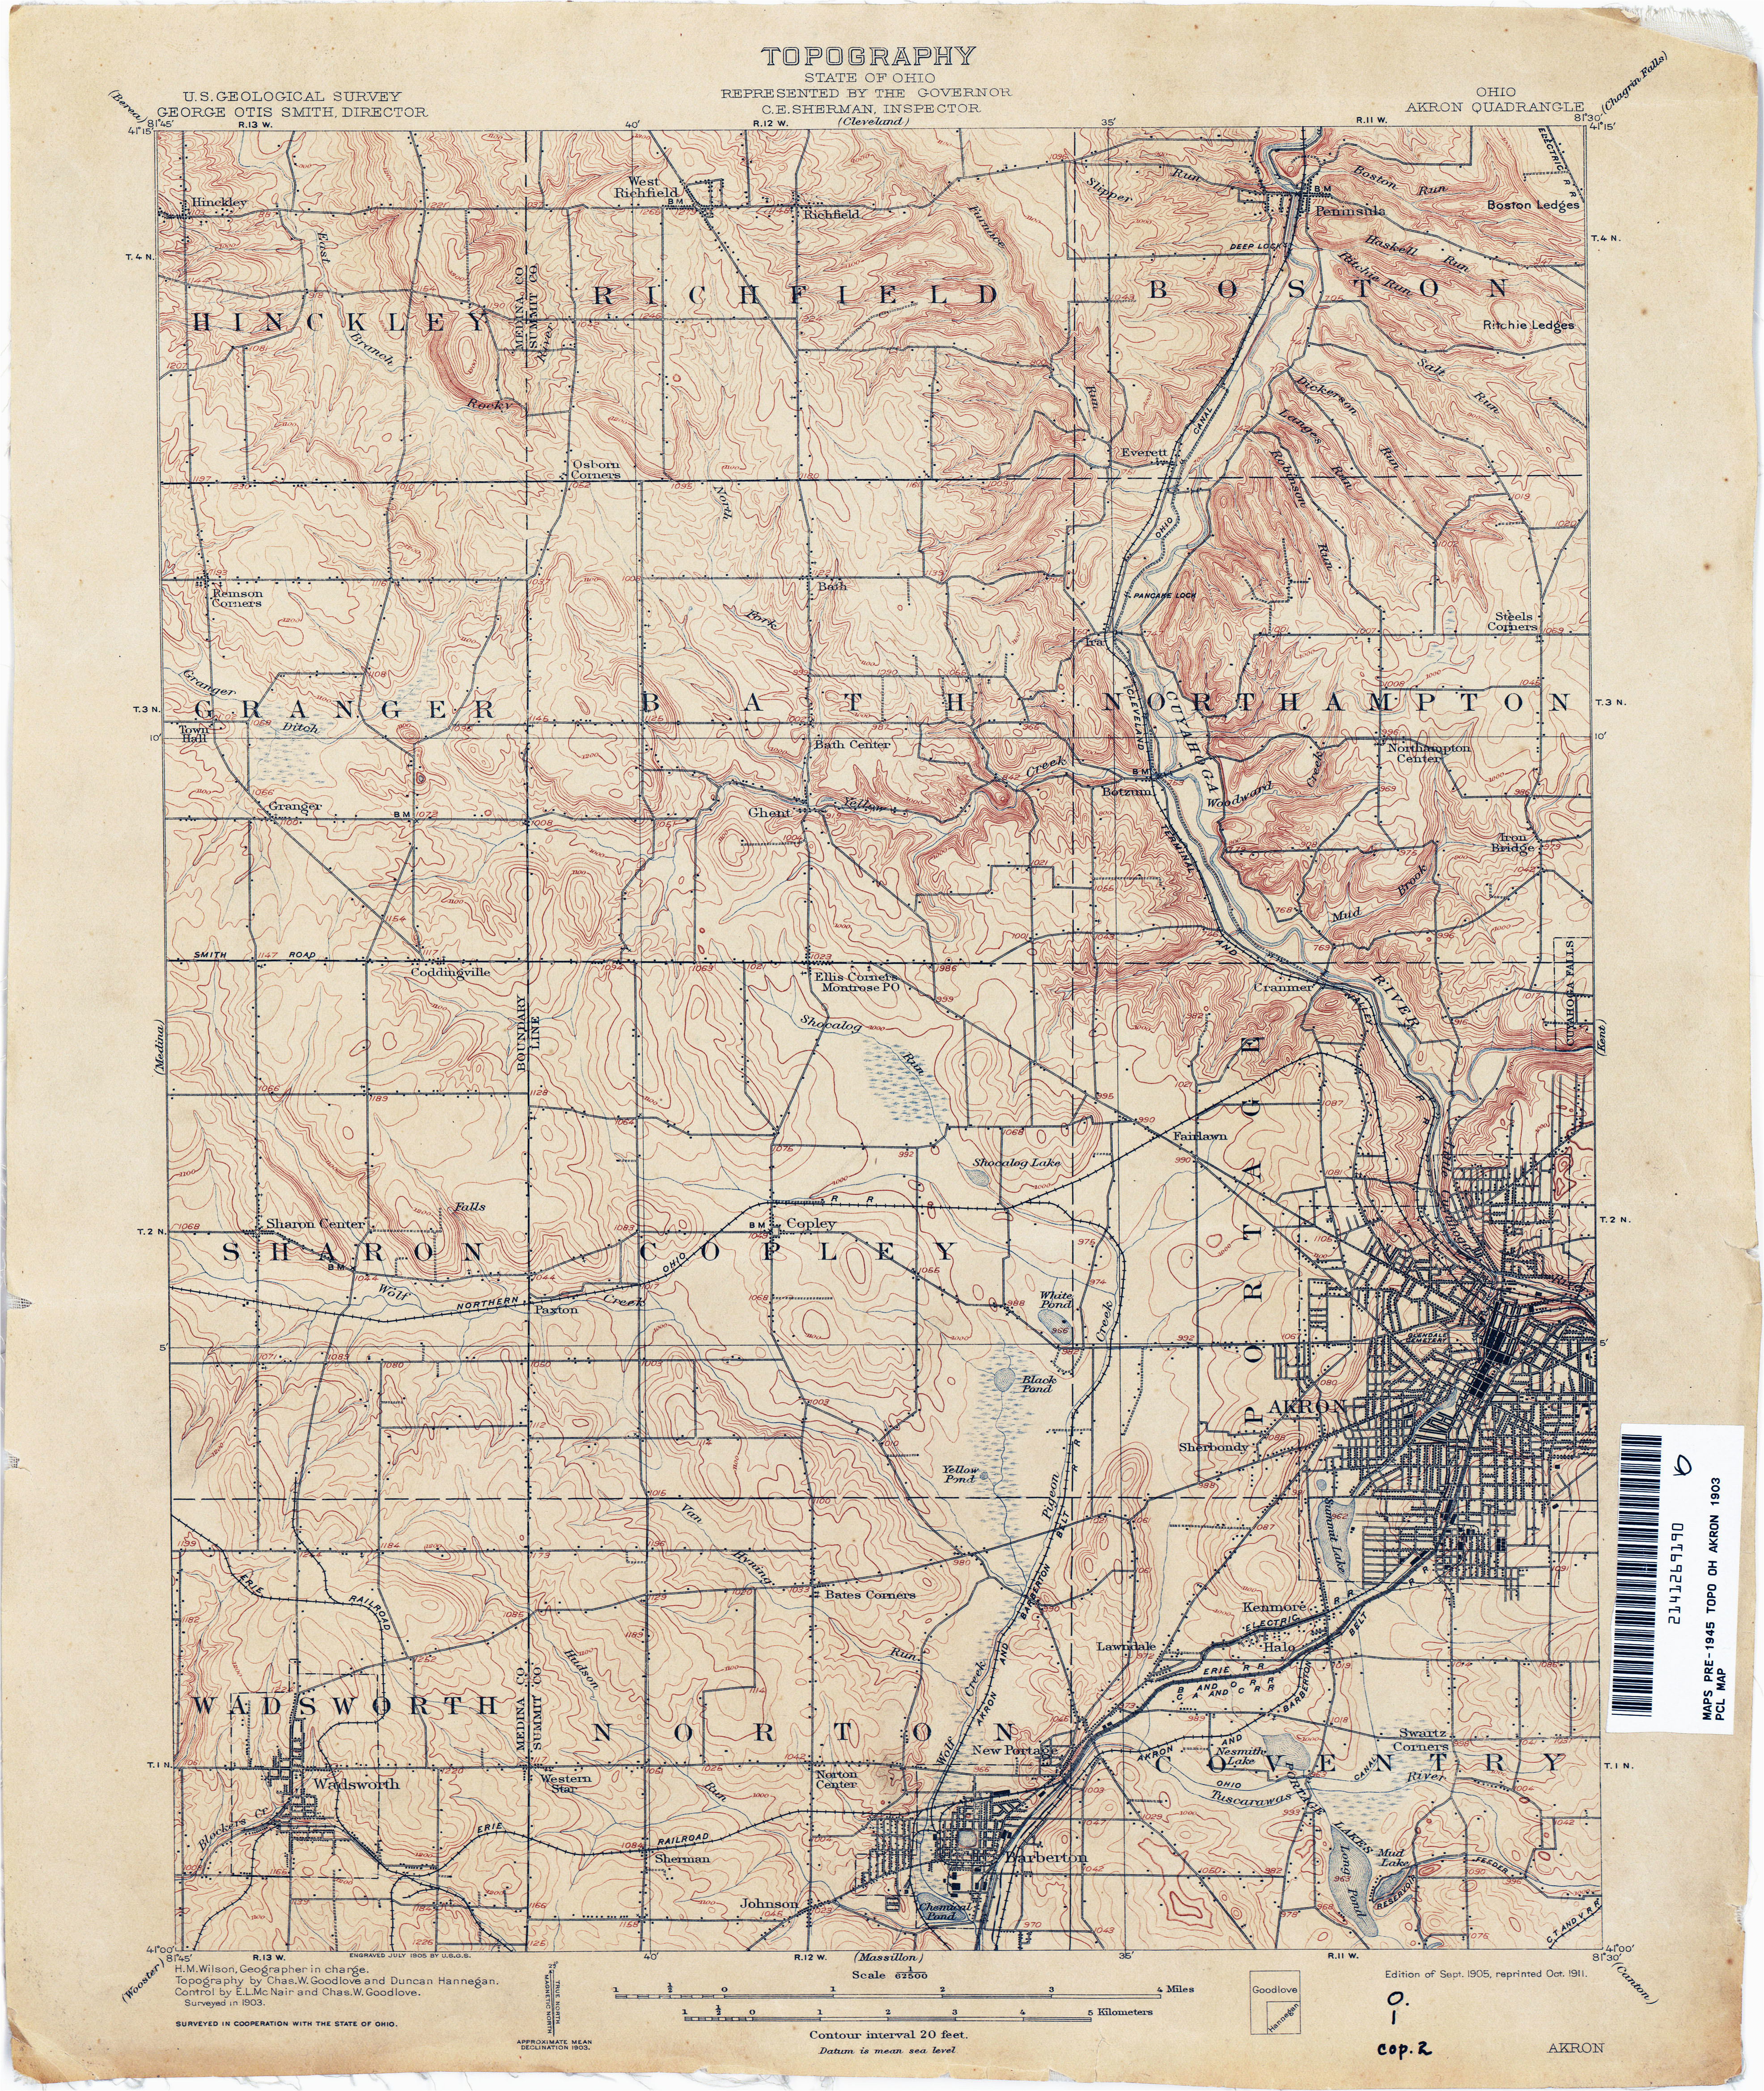 Dayton Ohio Maps Ohio Historical topographic Maps Perry Castaa Eda Map Collection